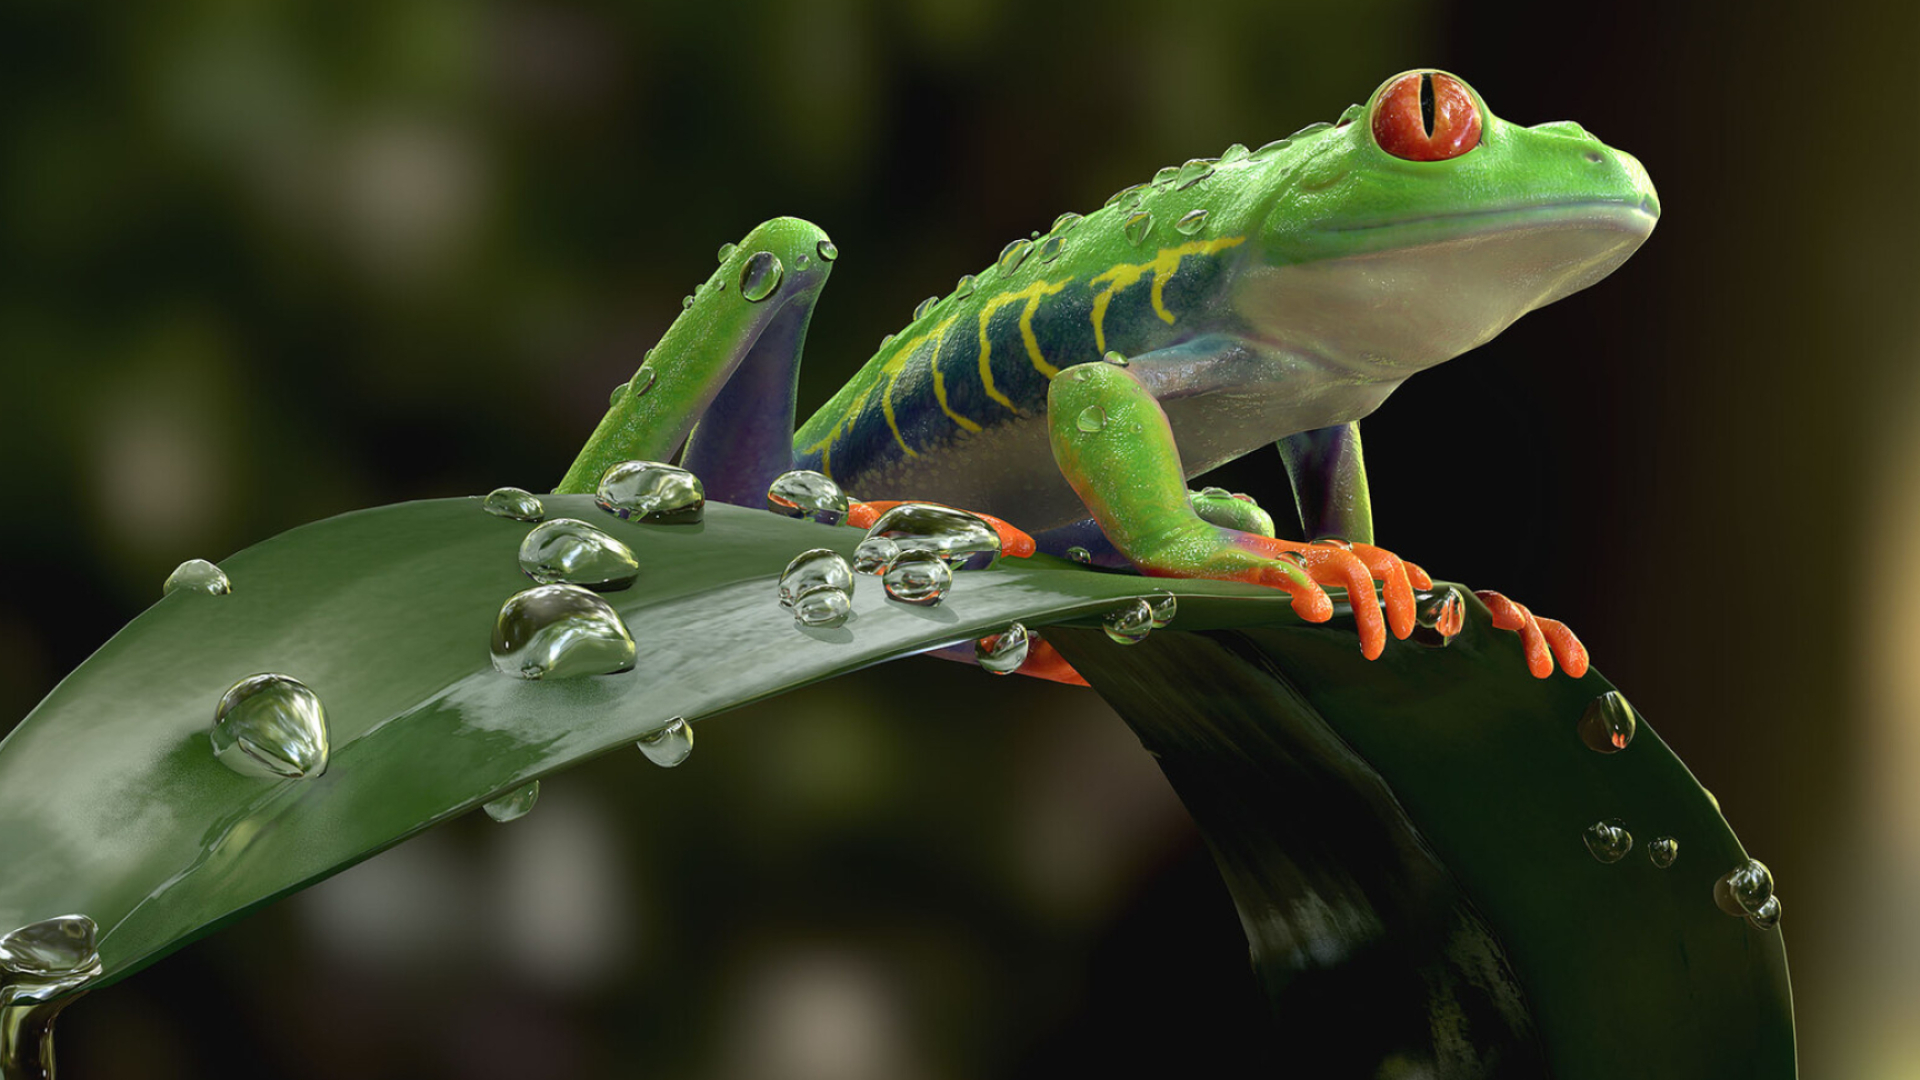 Artstation's wonders, Red Eyed Frog, CG artists' prowess, Creative amphibian, 1920x1080 Full HD Desktop